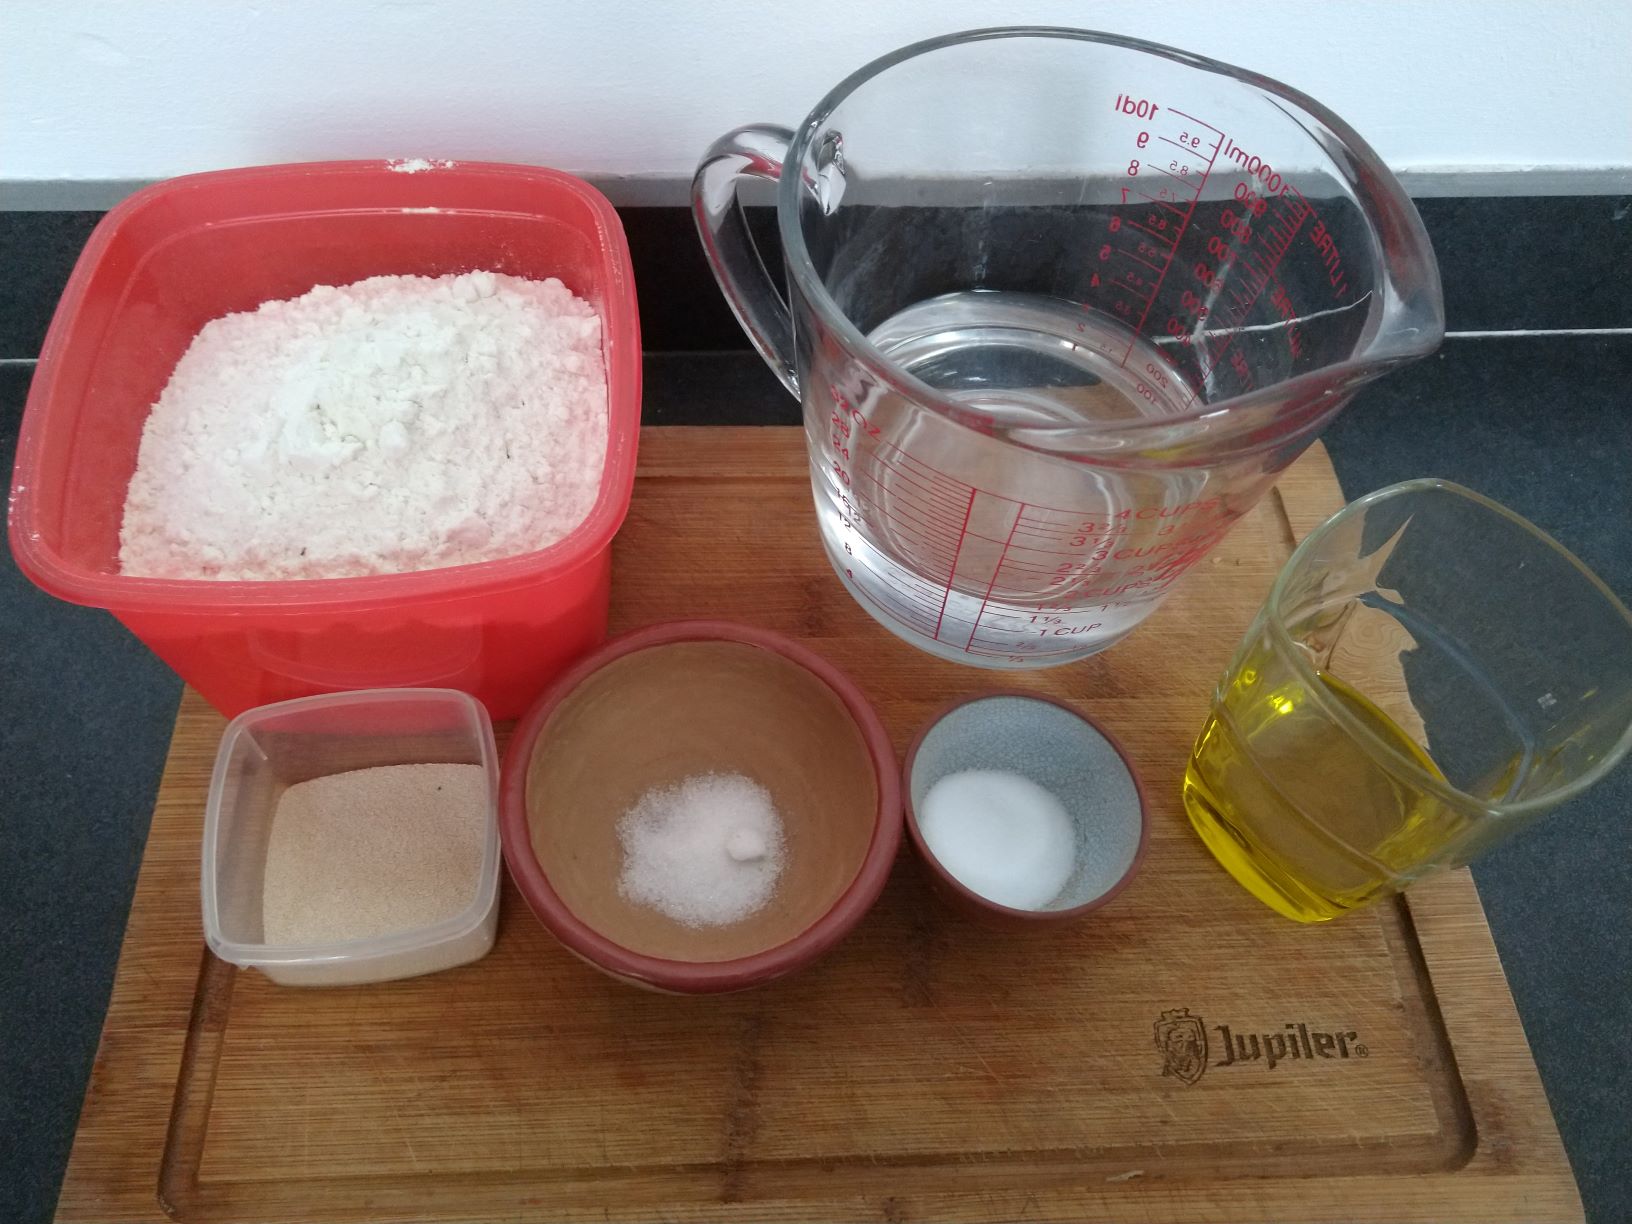 All dough ingredients measured before we start!